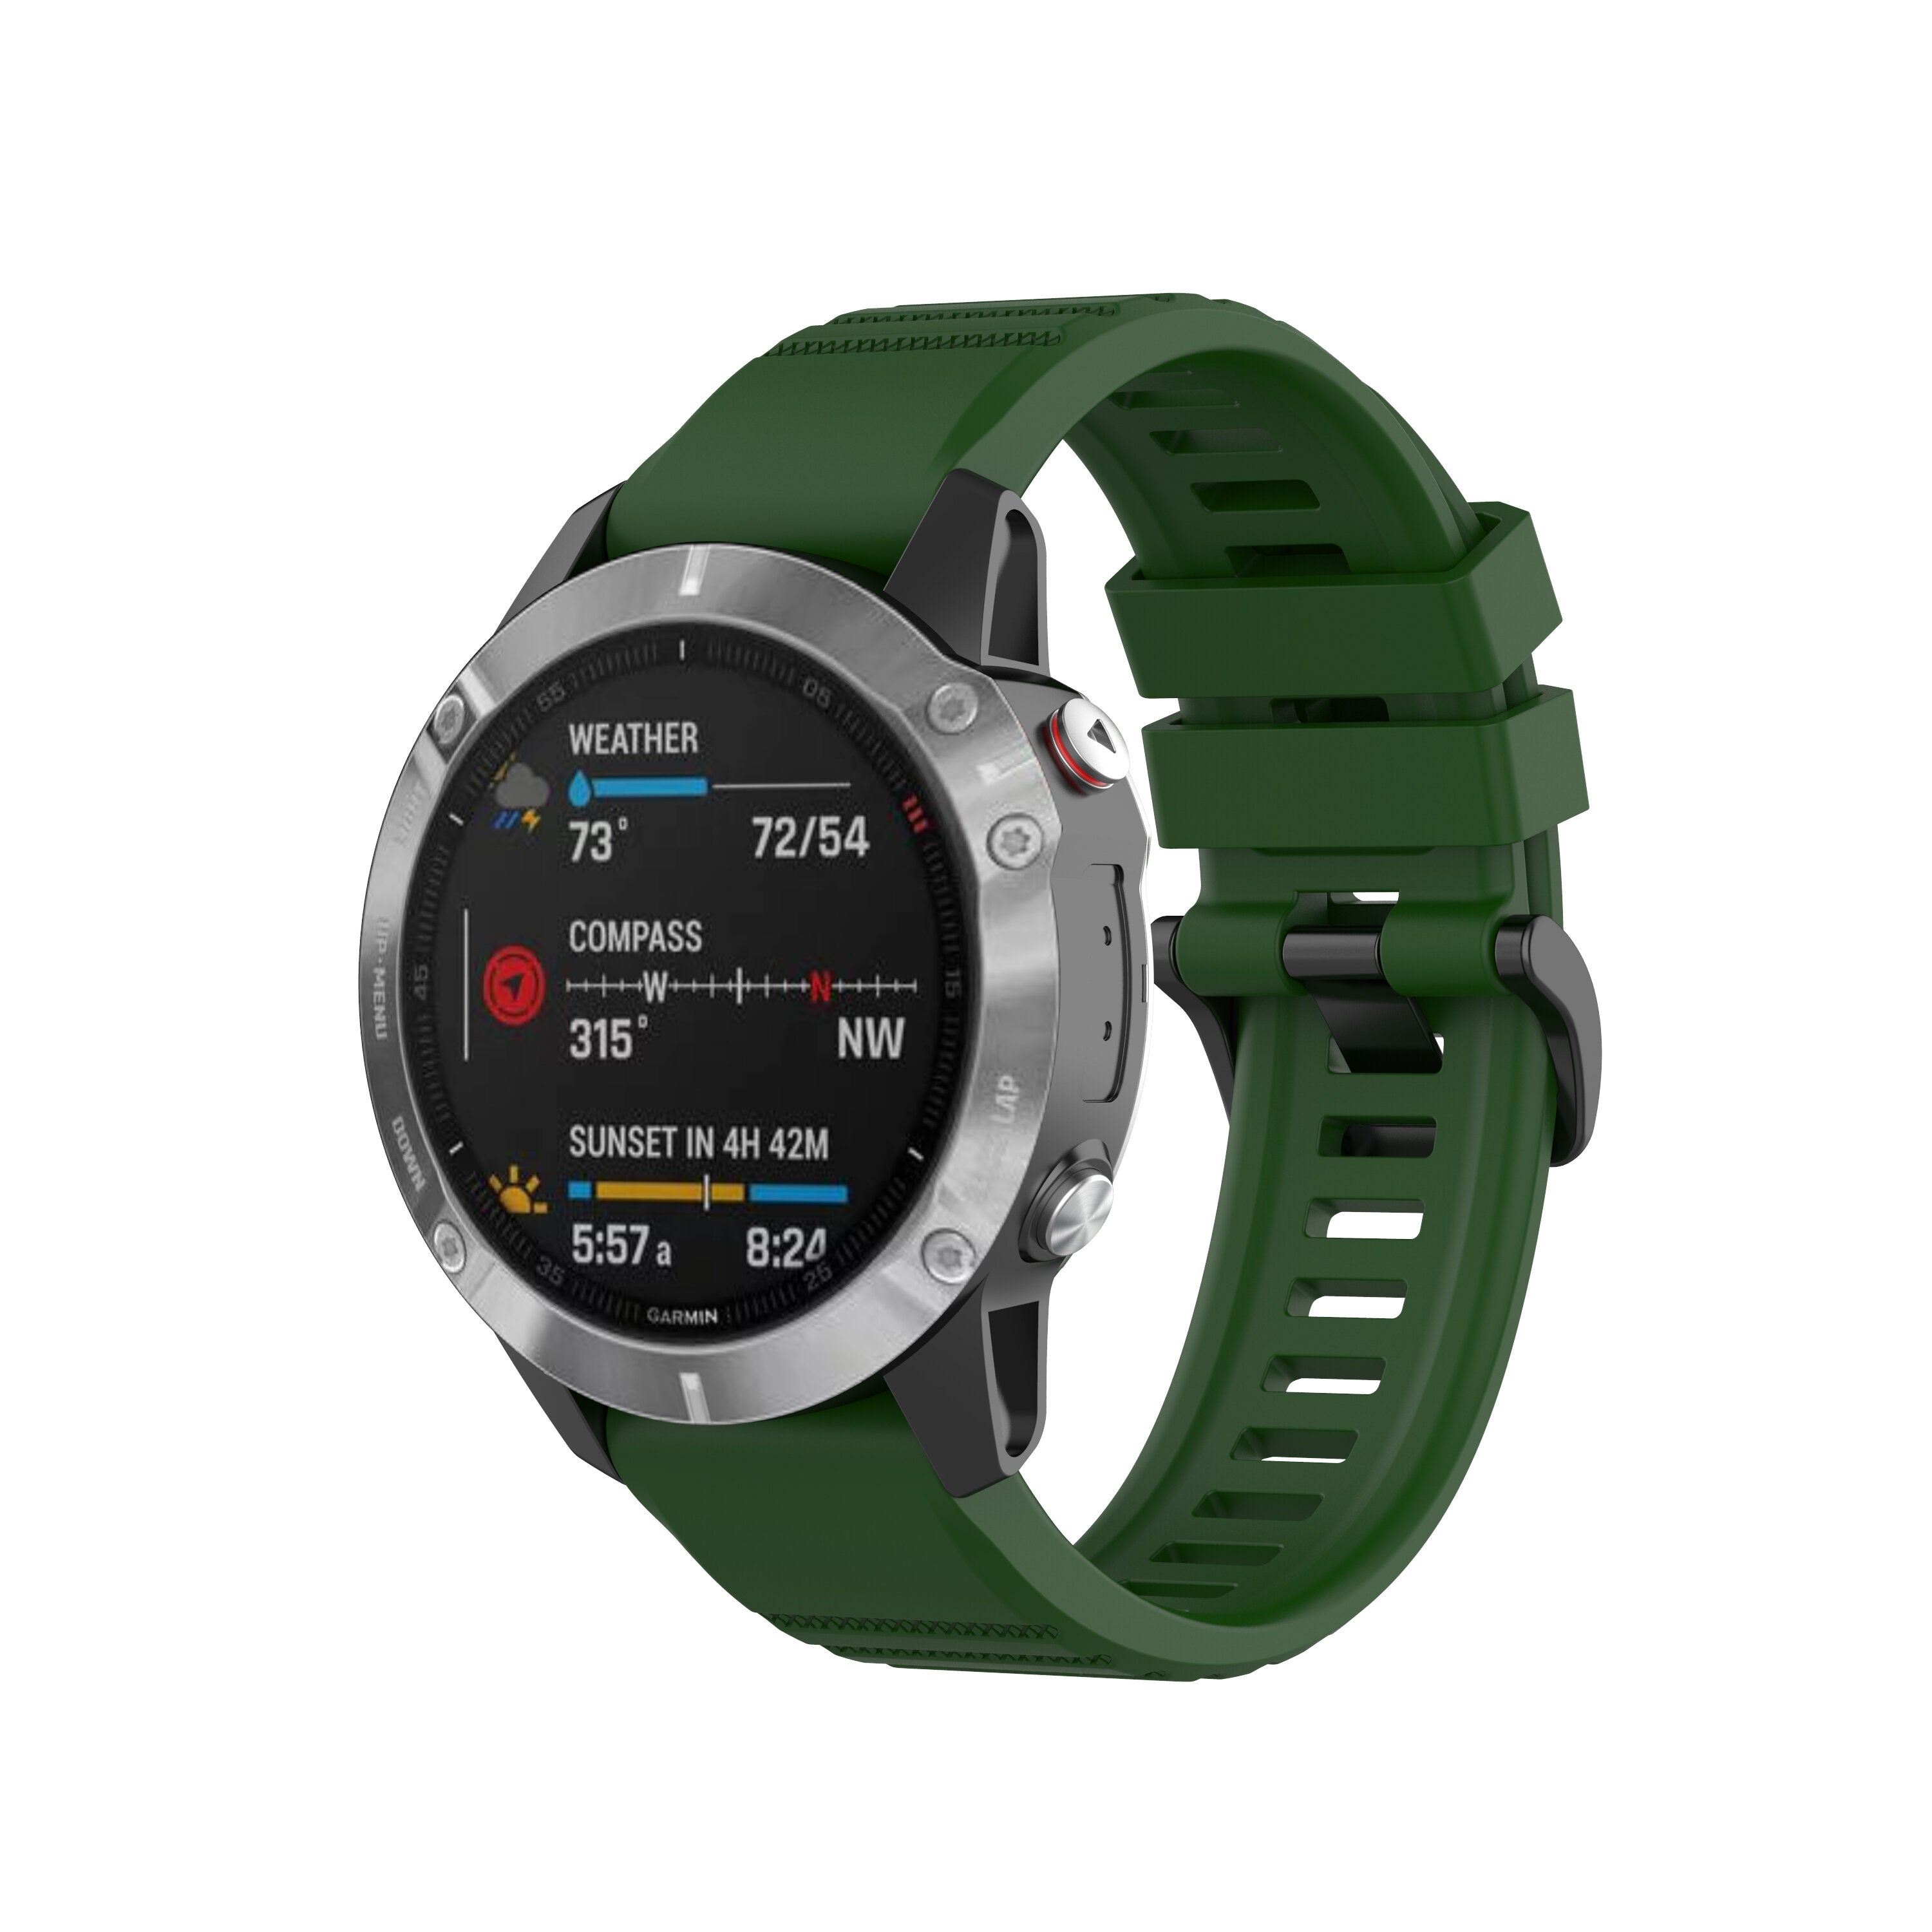 Universal 22MM Silicone Watch Band for Garmin Fenix 6 Fenix 5 Smart Watch